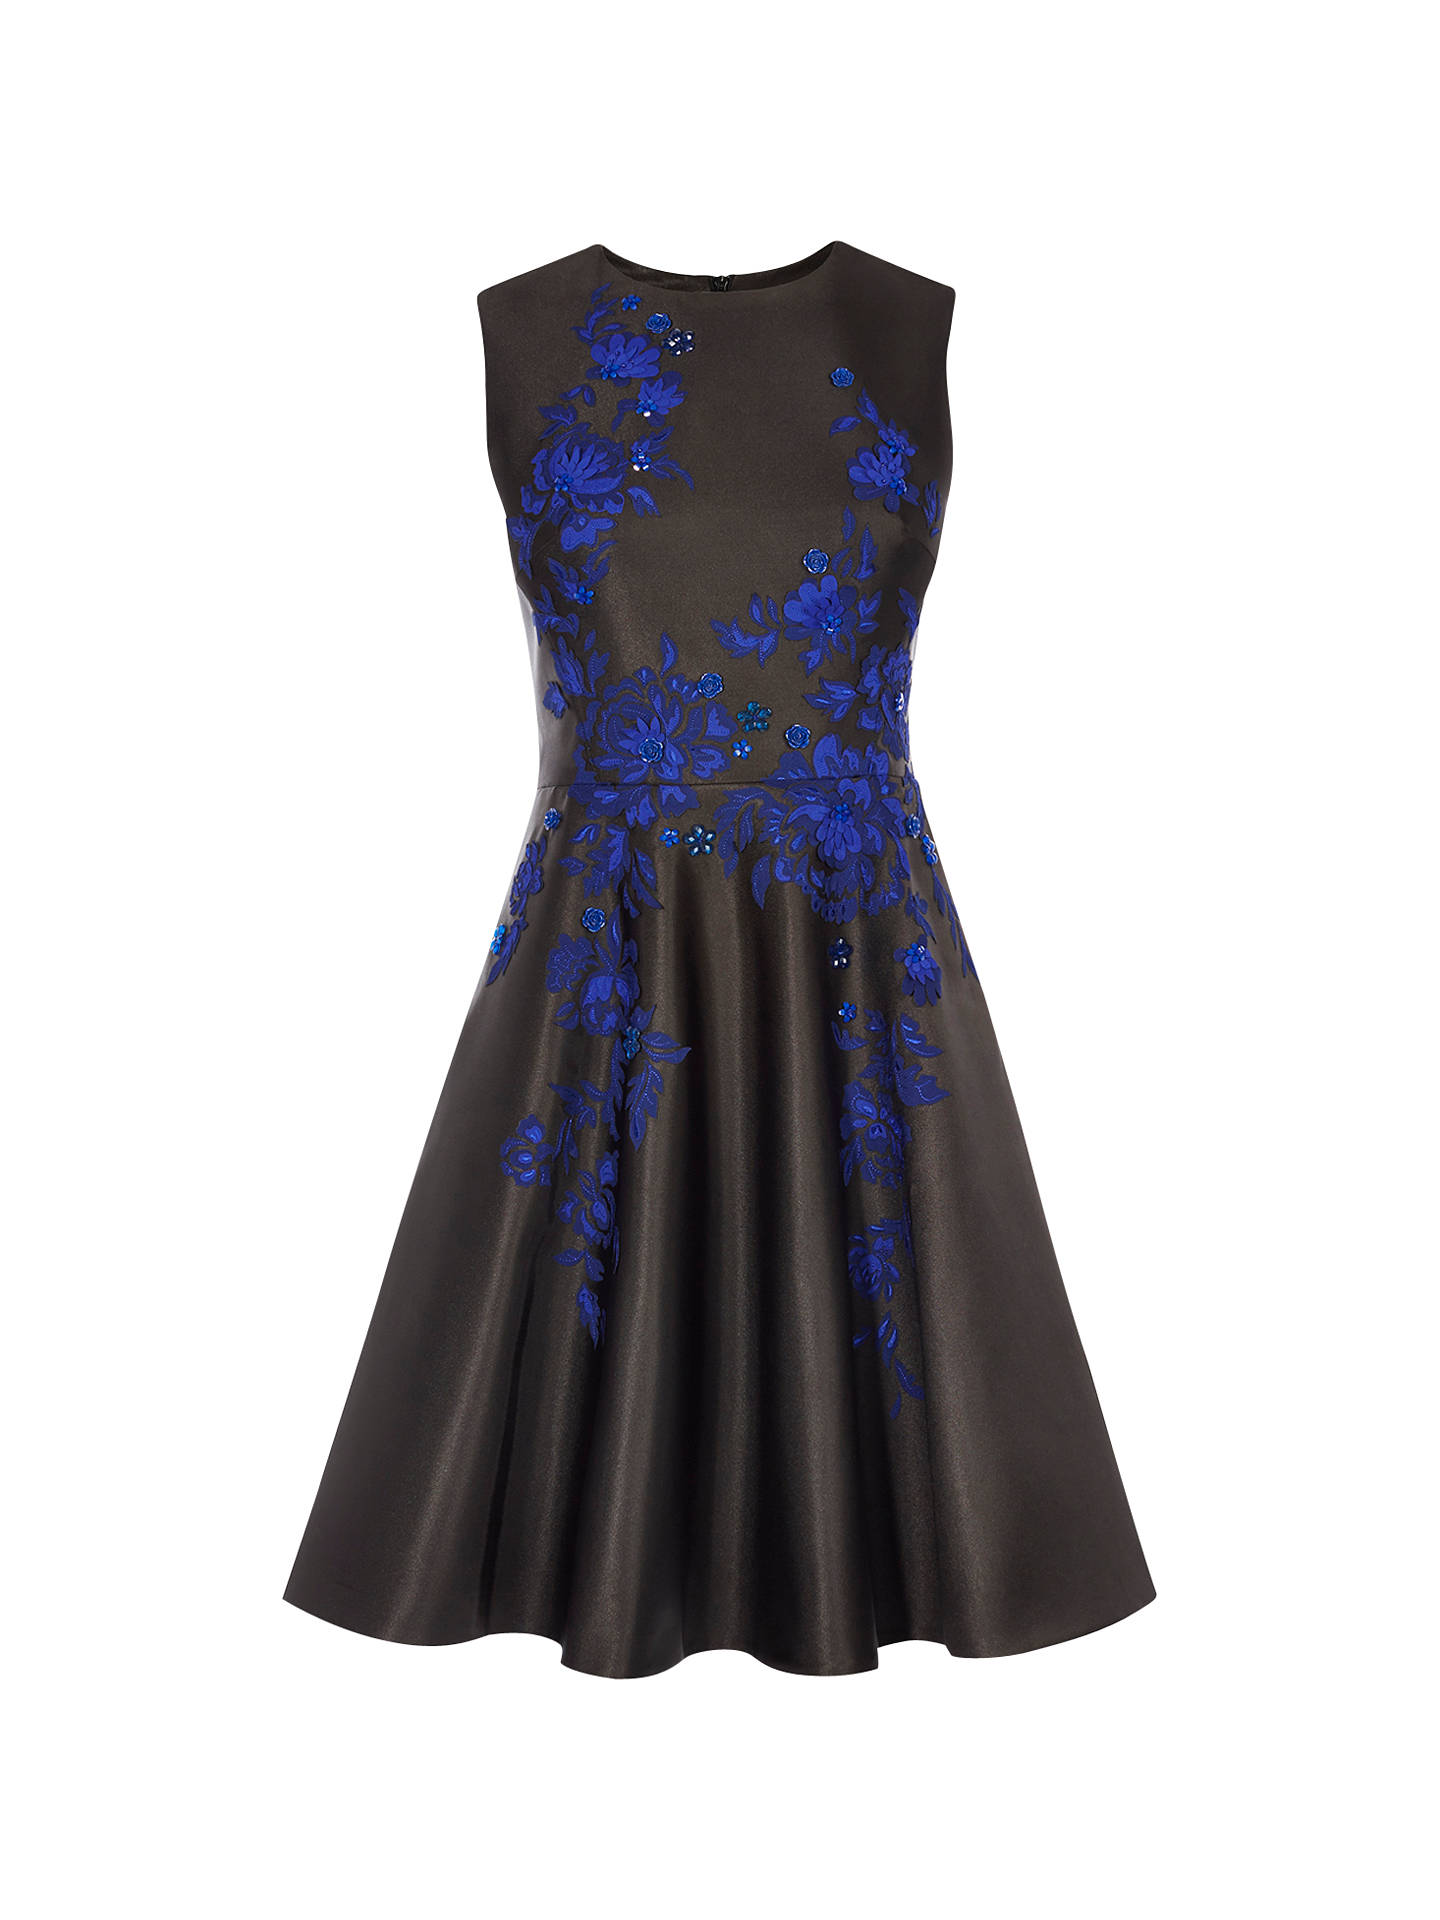 Karen Millen Applique Floral Dress, Black/Multi at John Lewis & Partners